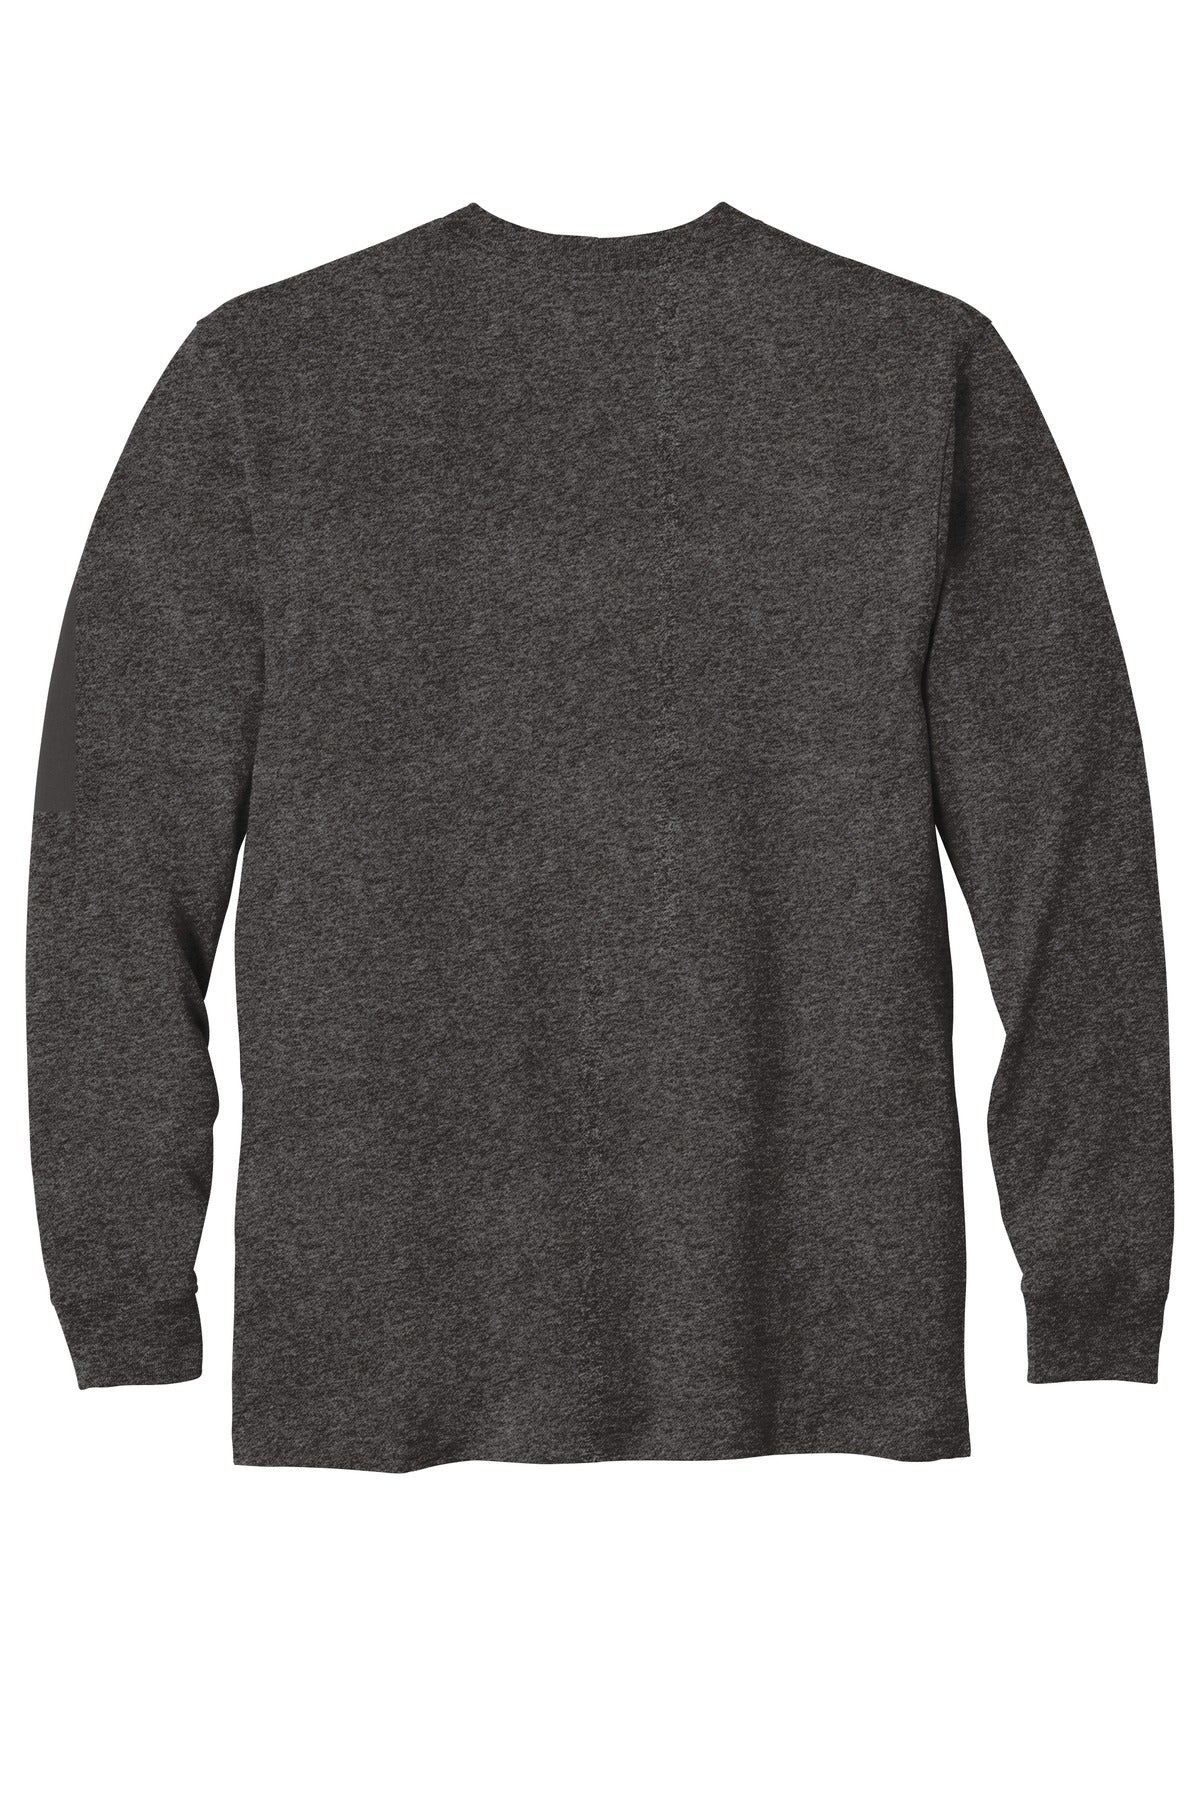 Carhartt Workwear Pocket Long Sleeve T-Shirt. CTK126